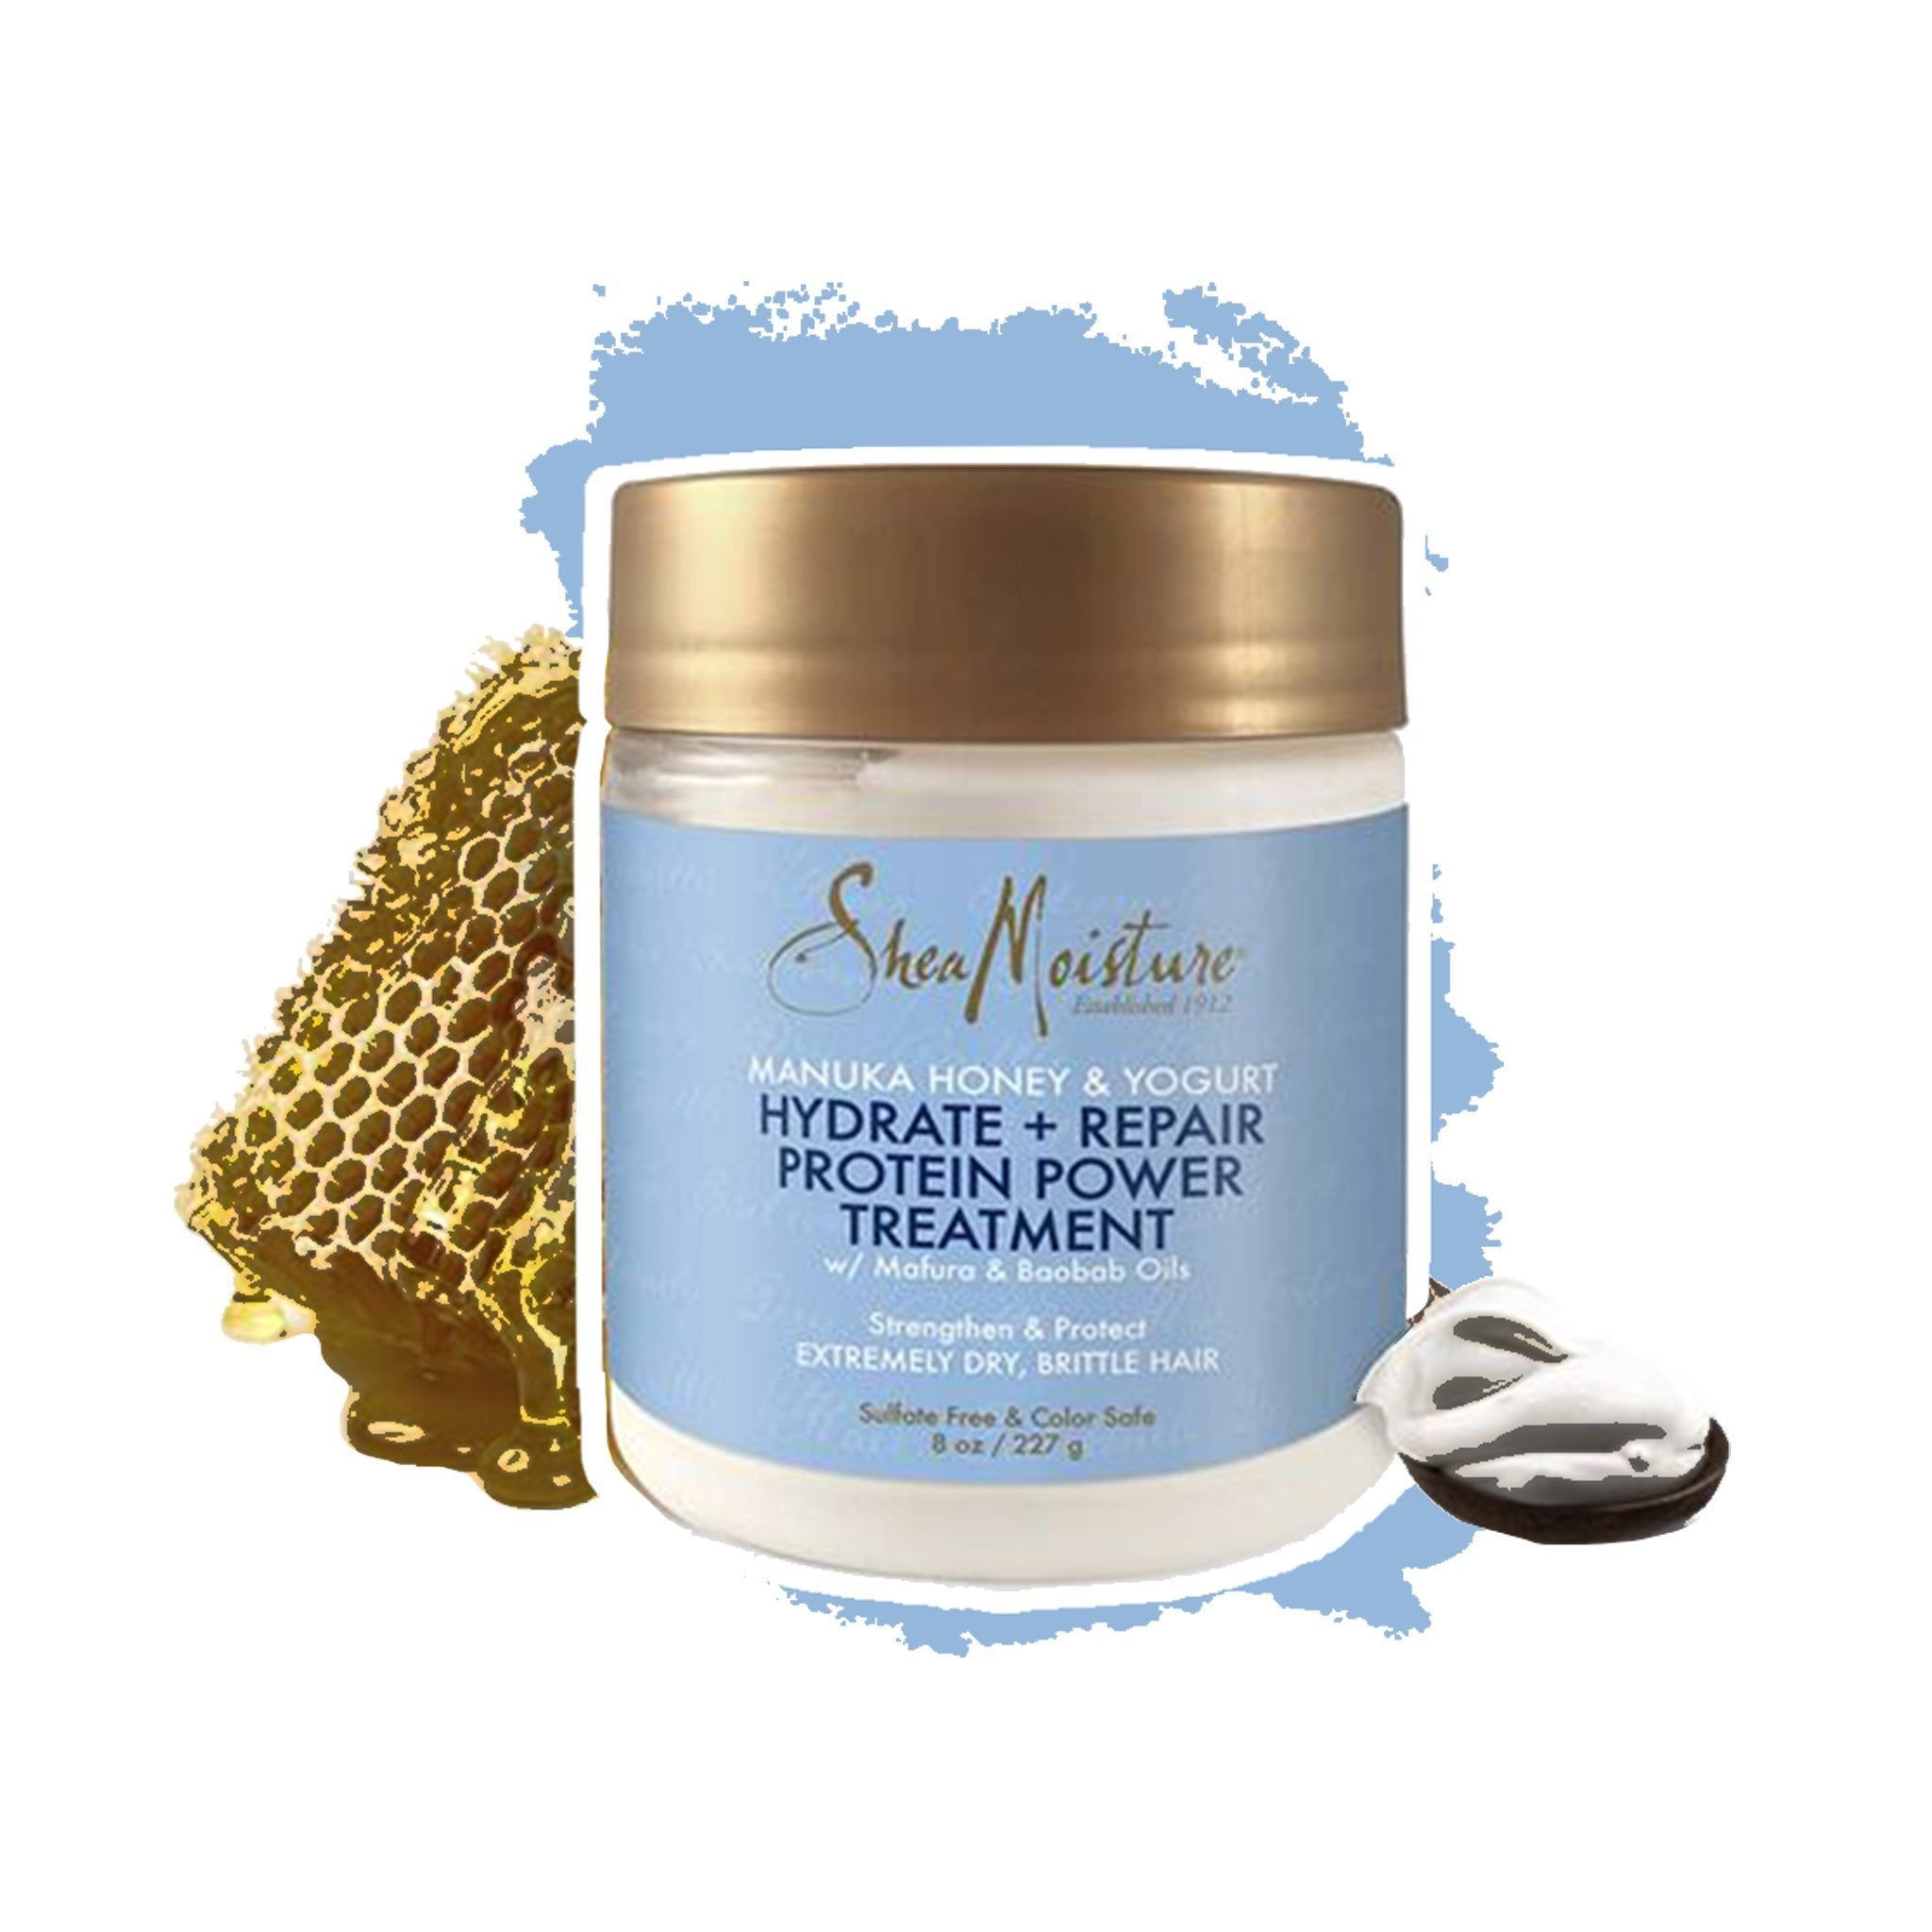 Shea Moisture | Manuka Honey & Yoghurt Hydrate + Repair Protein Power Treatment - lockenkopf                                